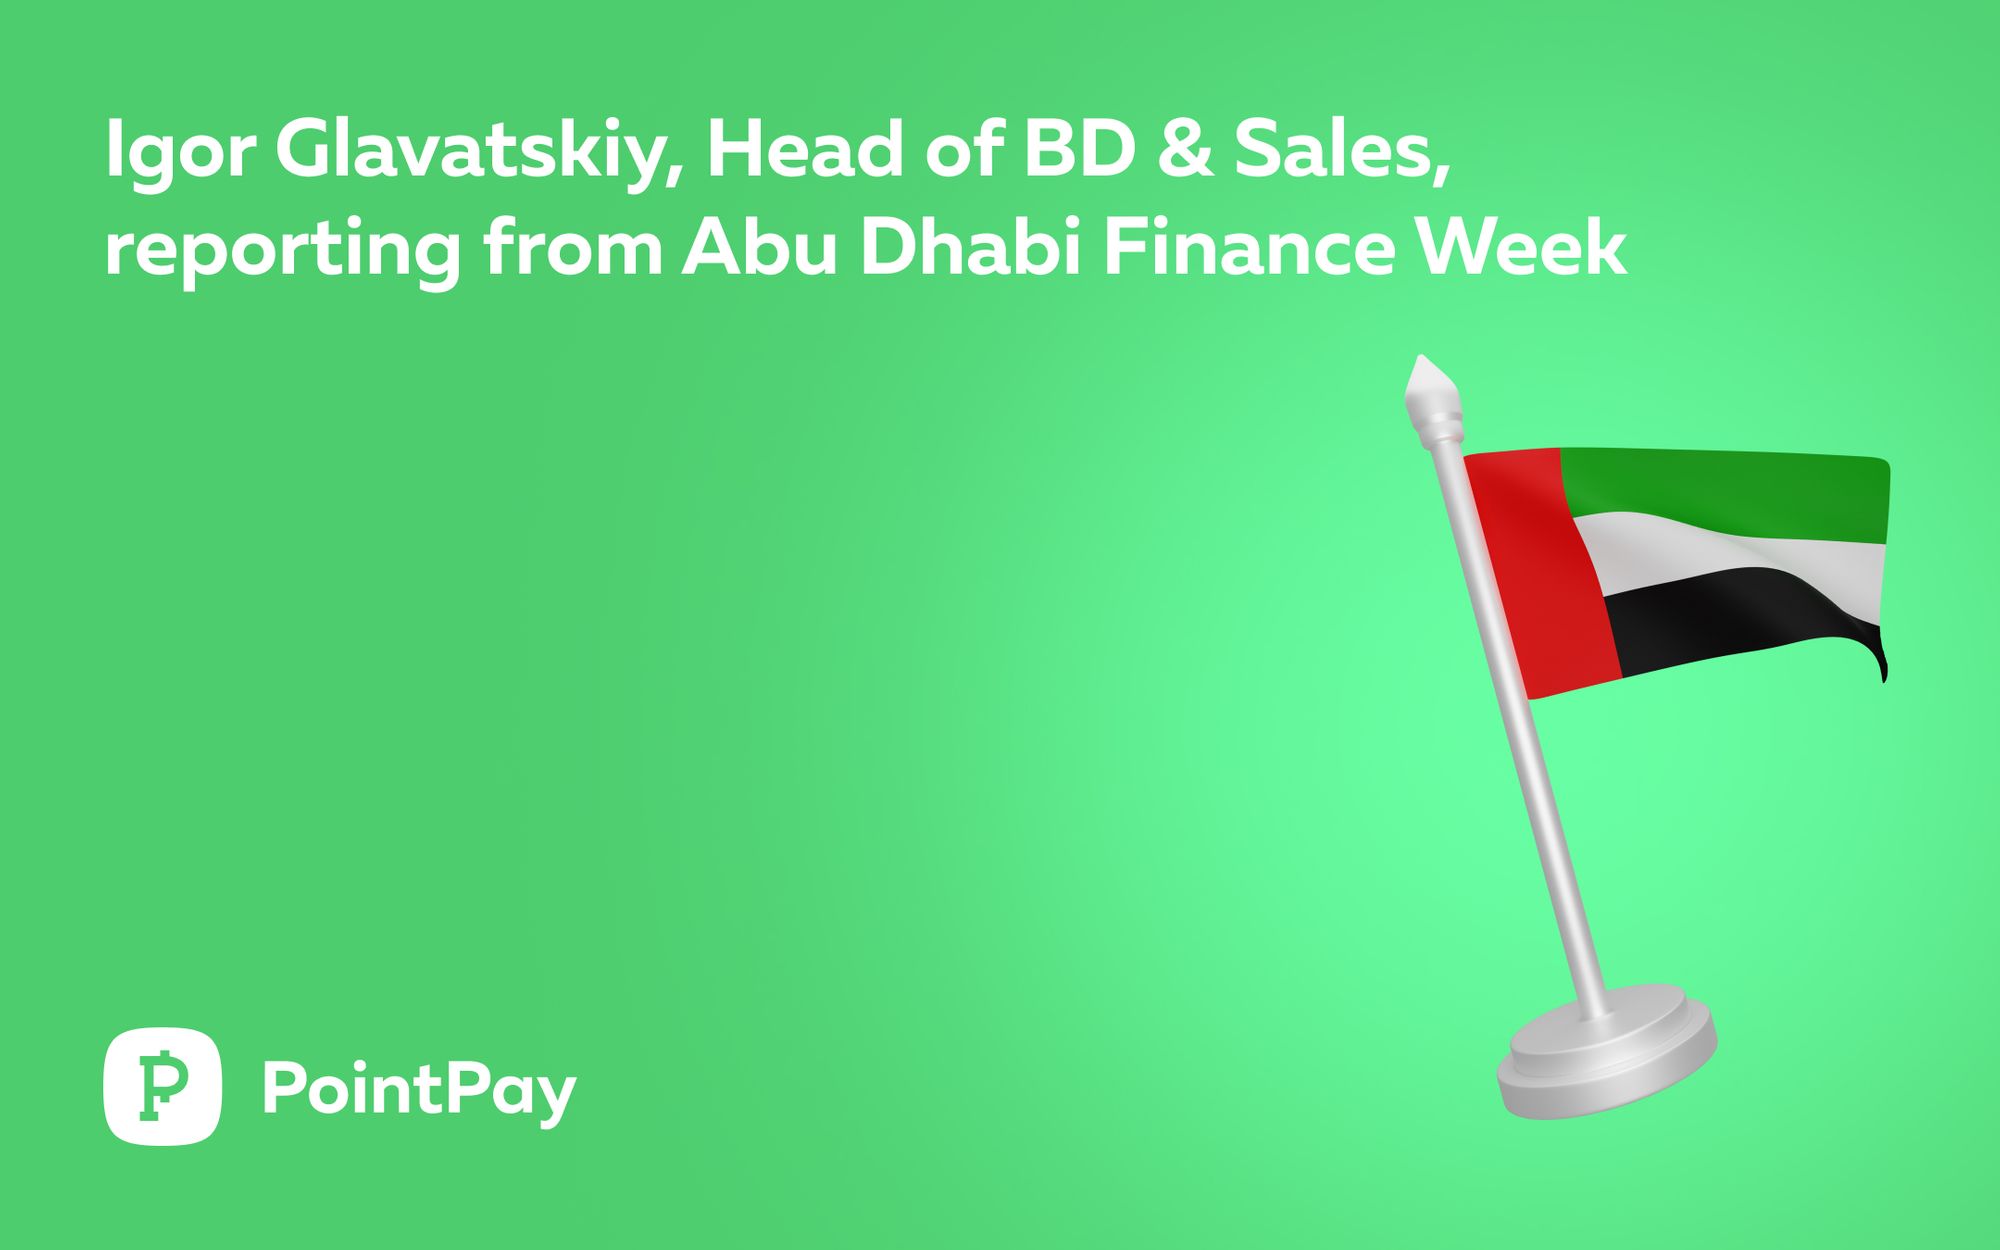 Igor Glavatskiy, PointPay's Representative, on the line from Dubai, Abu Dhabi Finance Week event